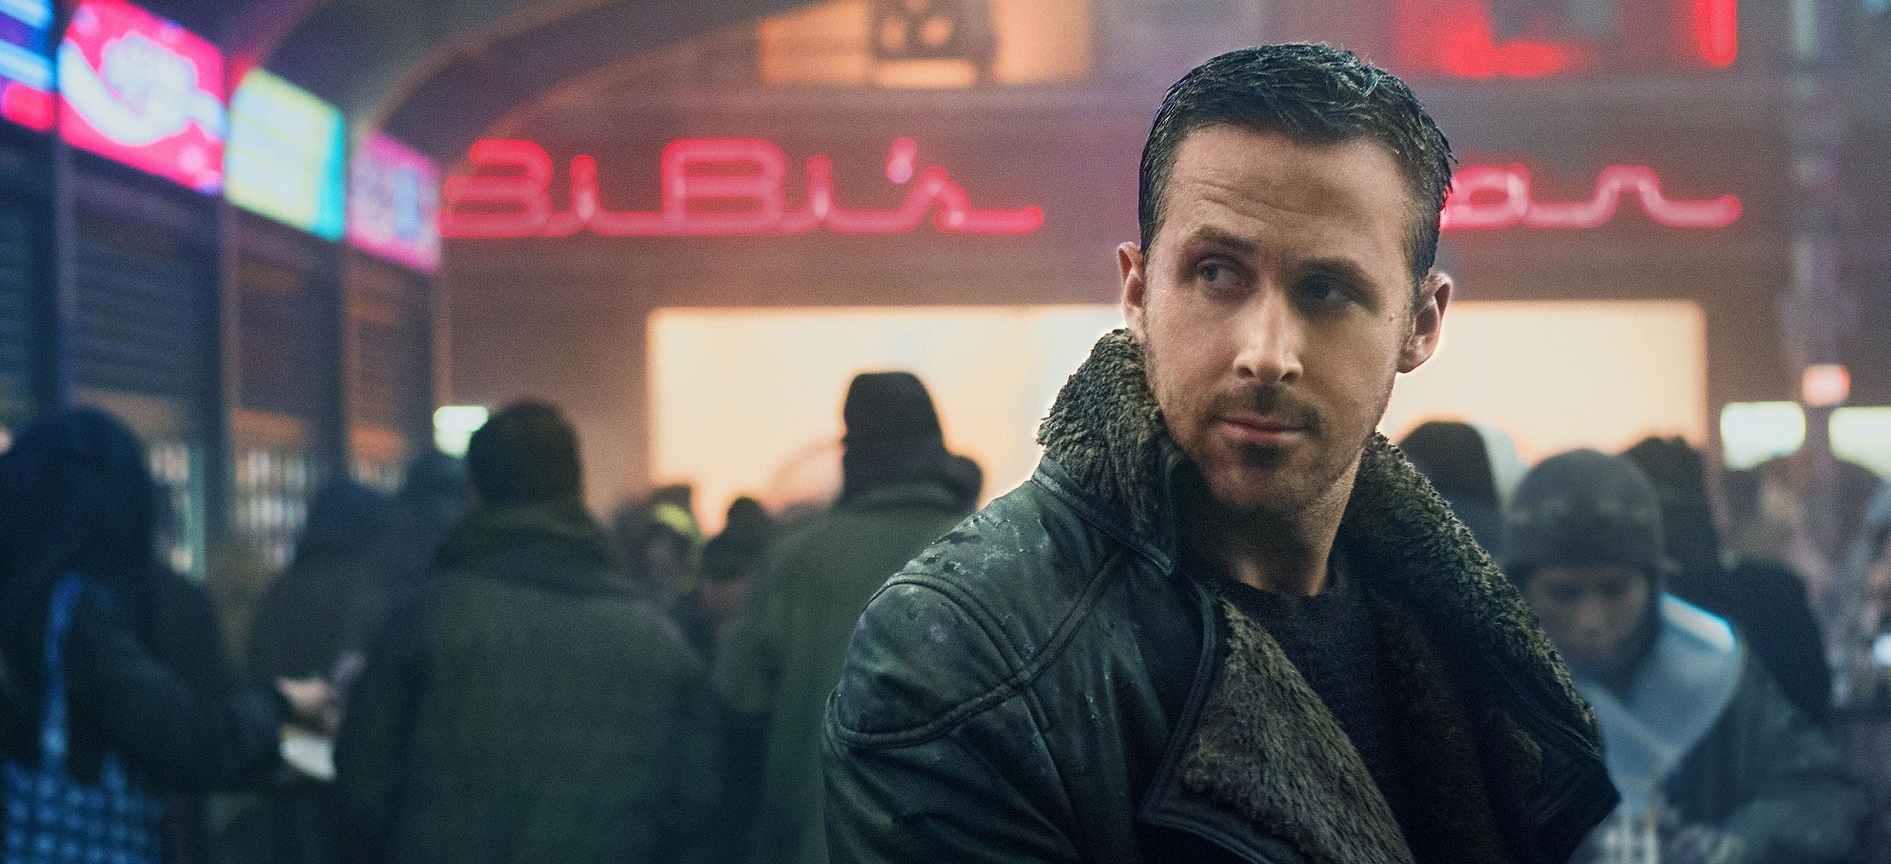 Ryan Gosling Blade Runner 2049 Wallpapers